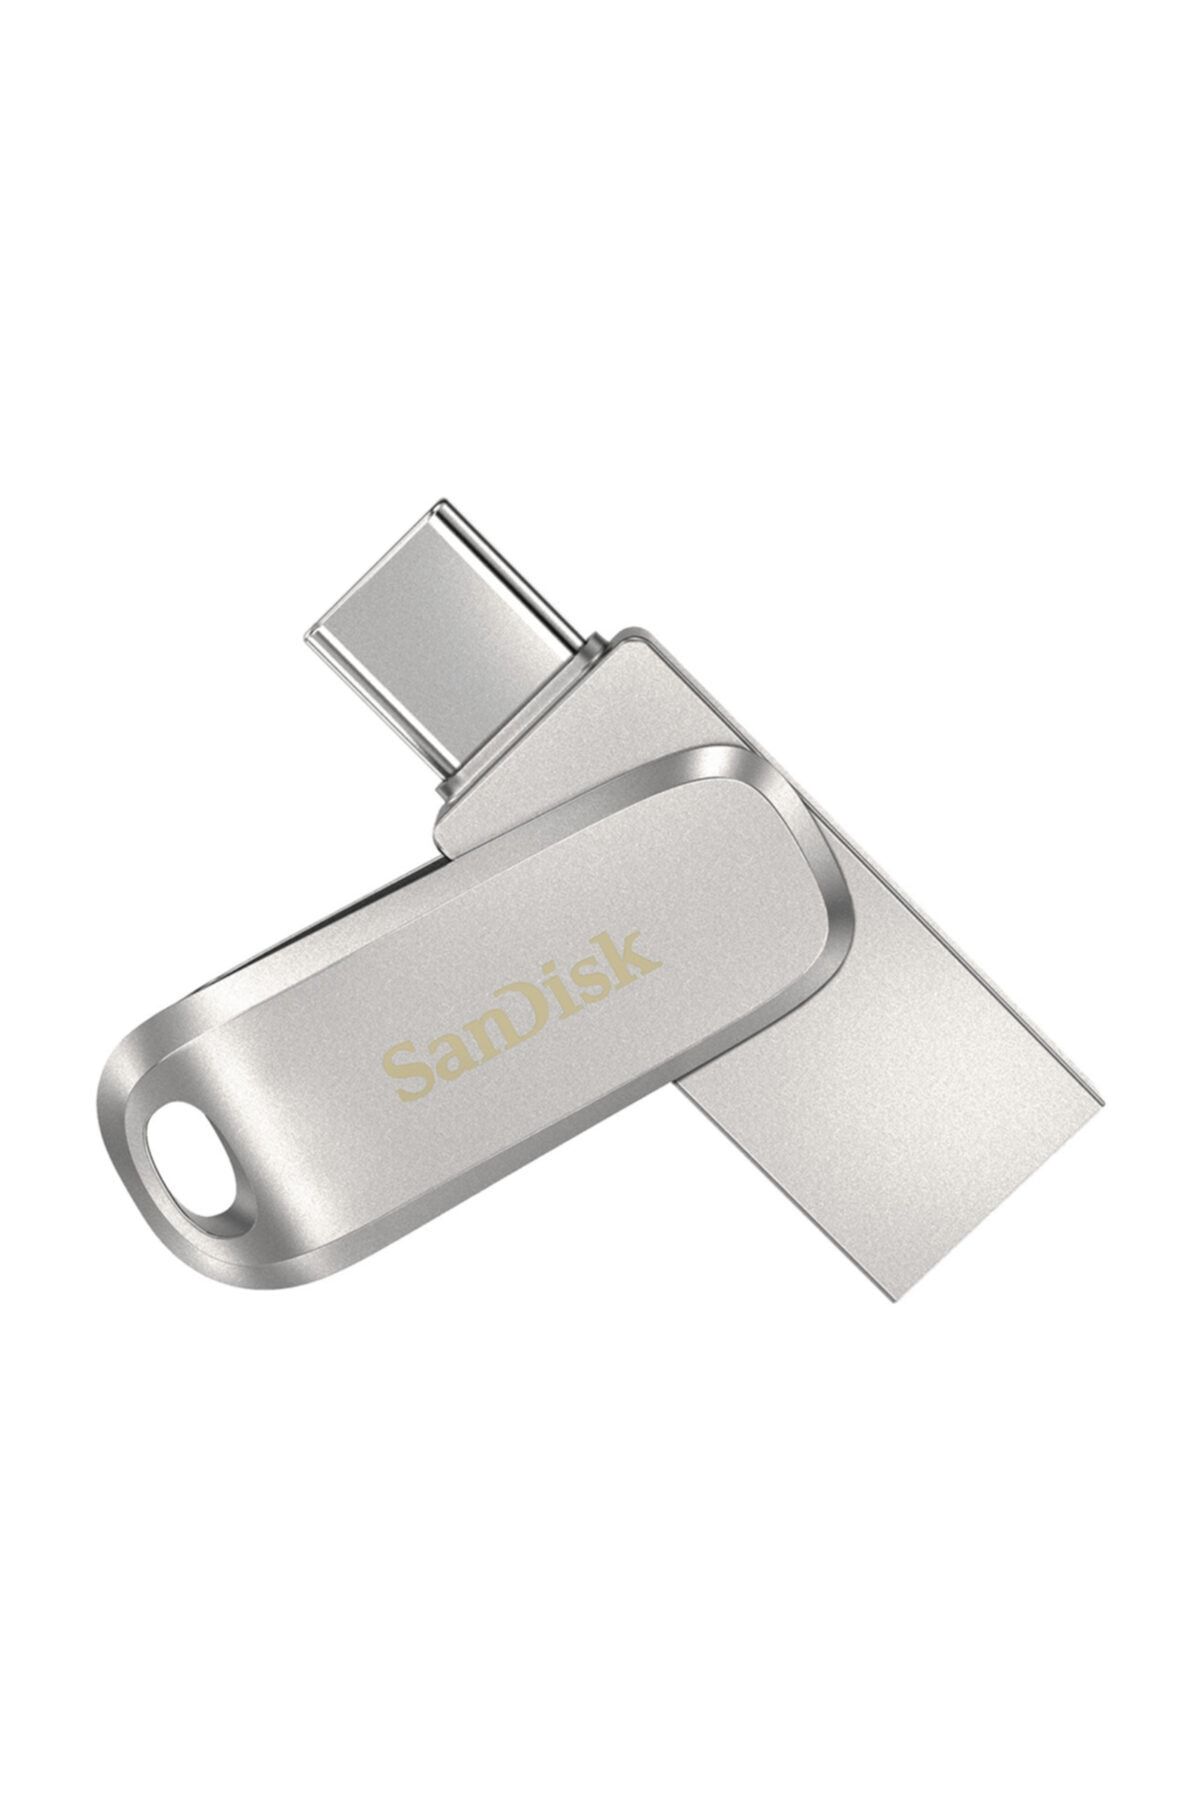 Sandisk Ultra Dual Drive Luxe 512gb Type-c Usb Bellek Sdddc4-512g-g46